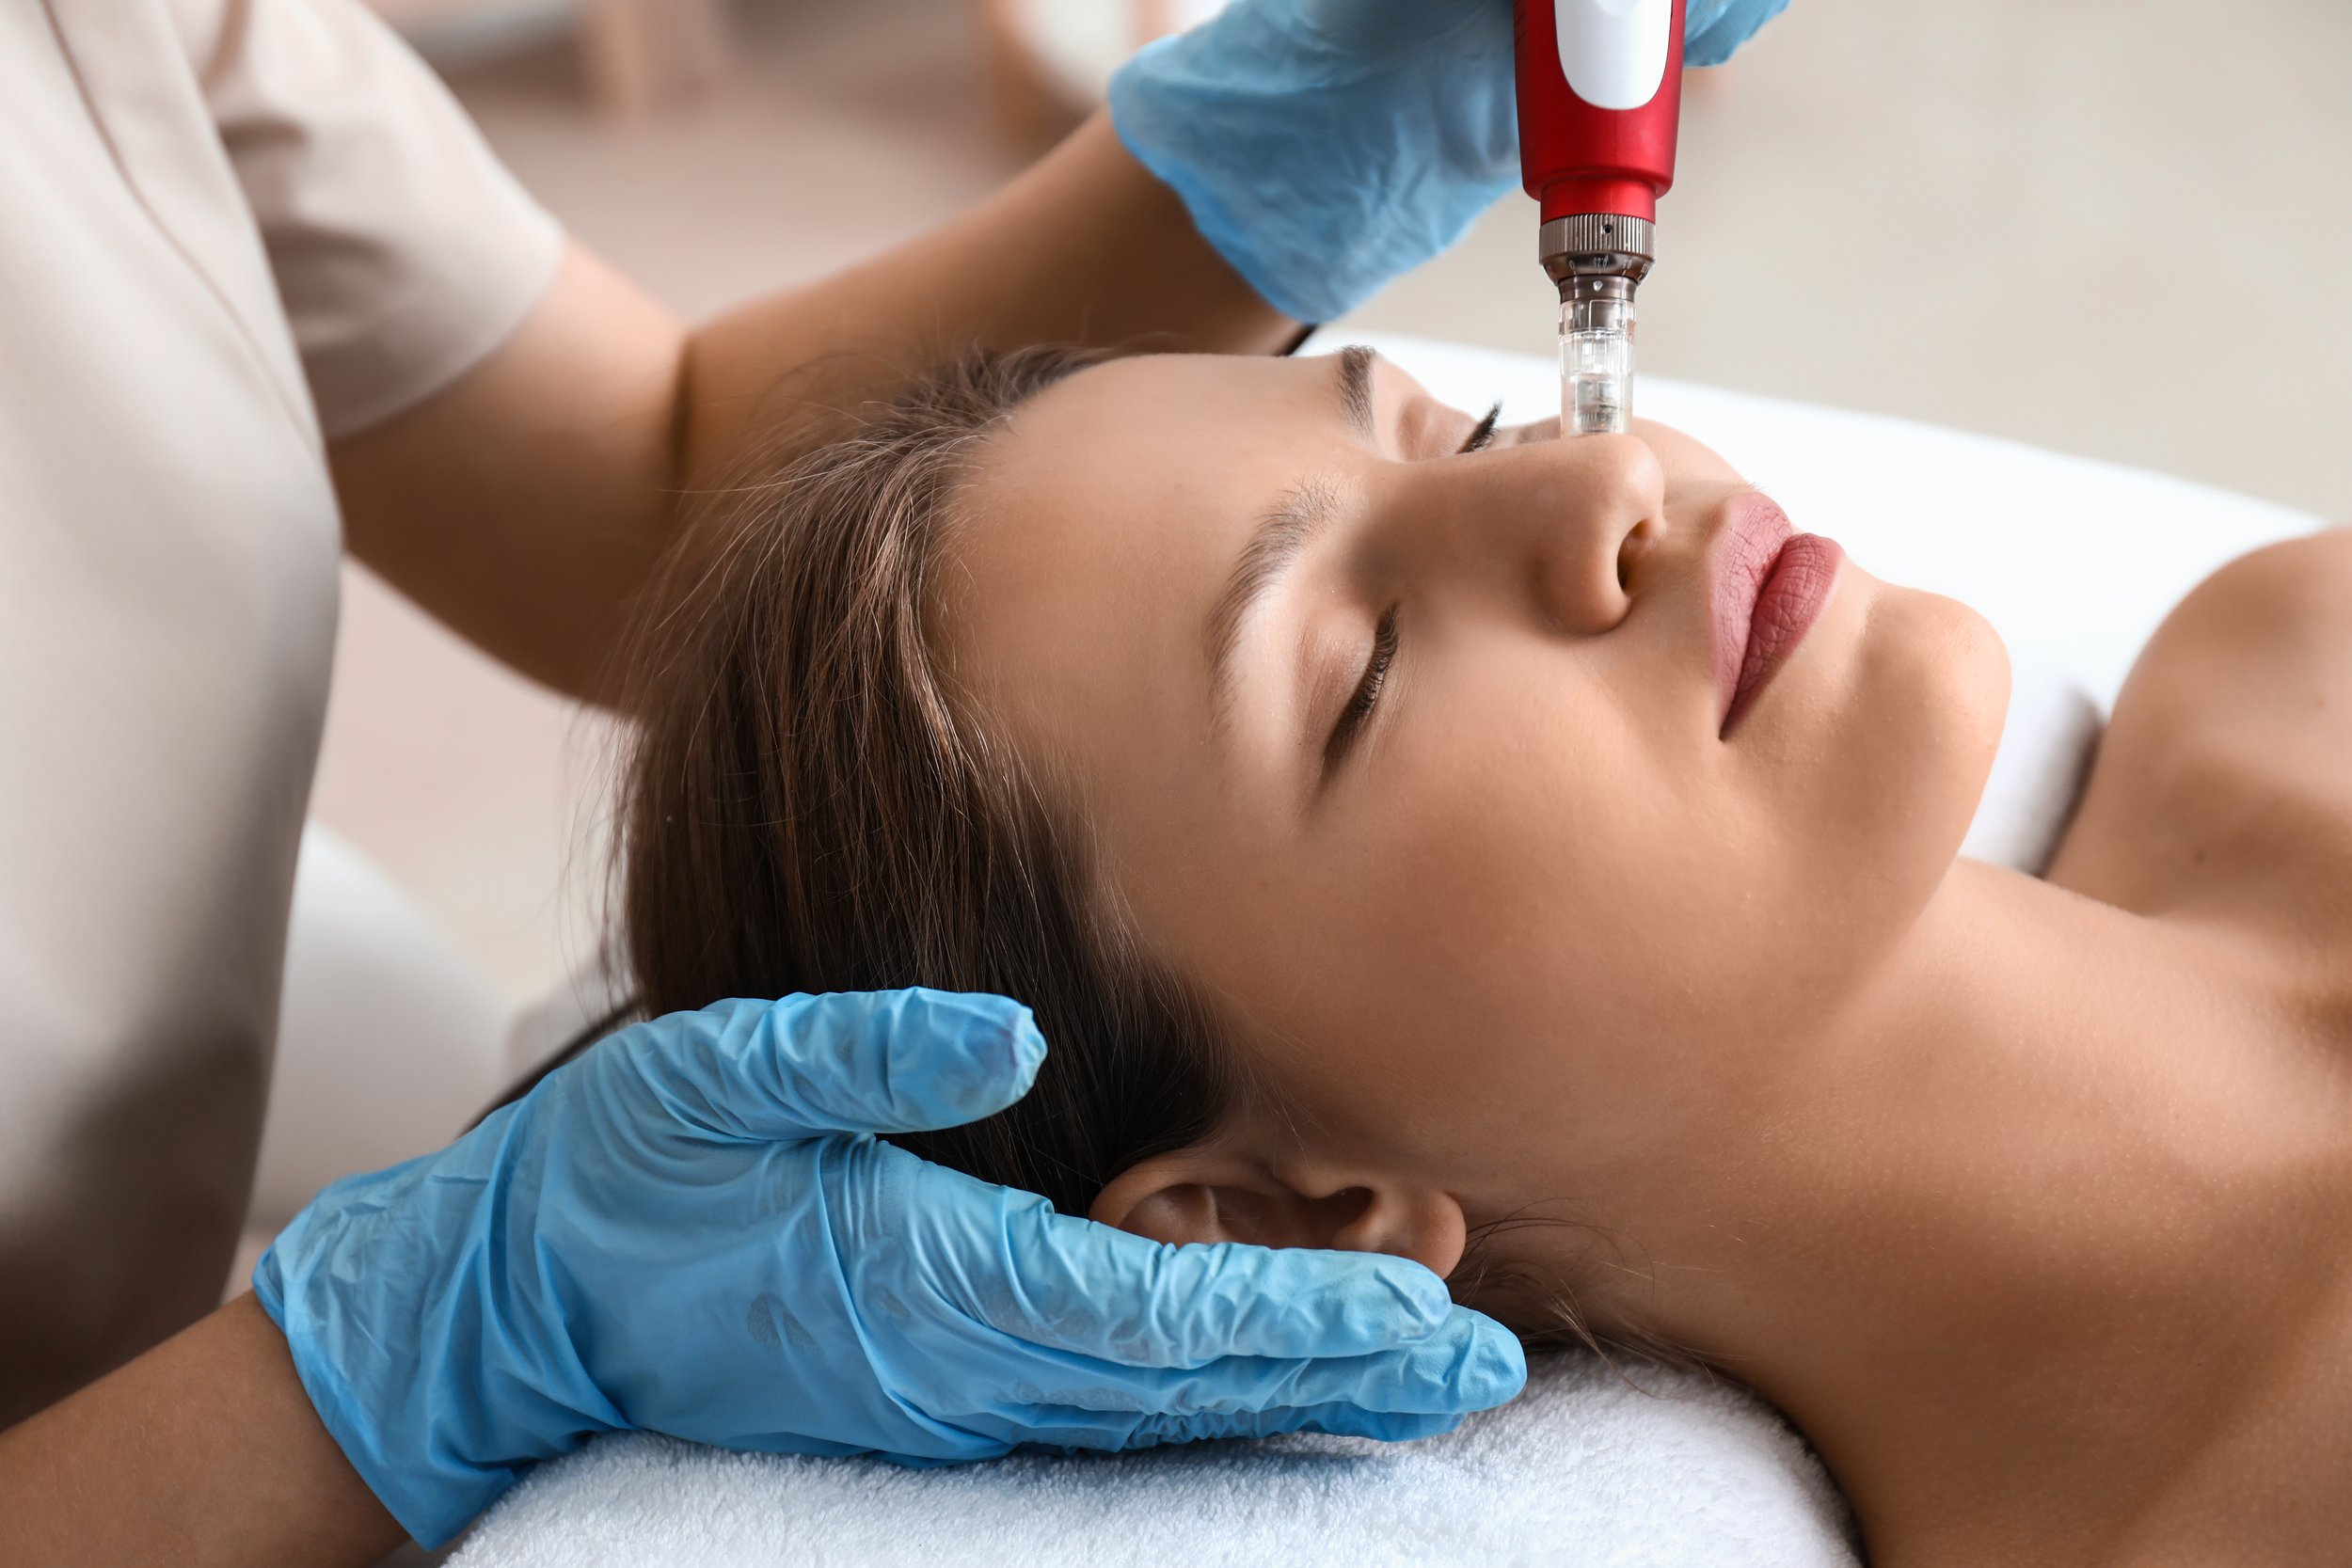 young-woman-undergoing-procedure-bb-glow-treatment-beauty-salon.jpg